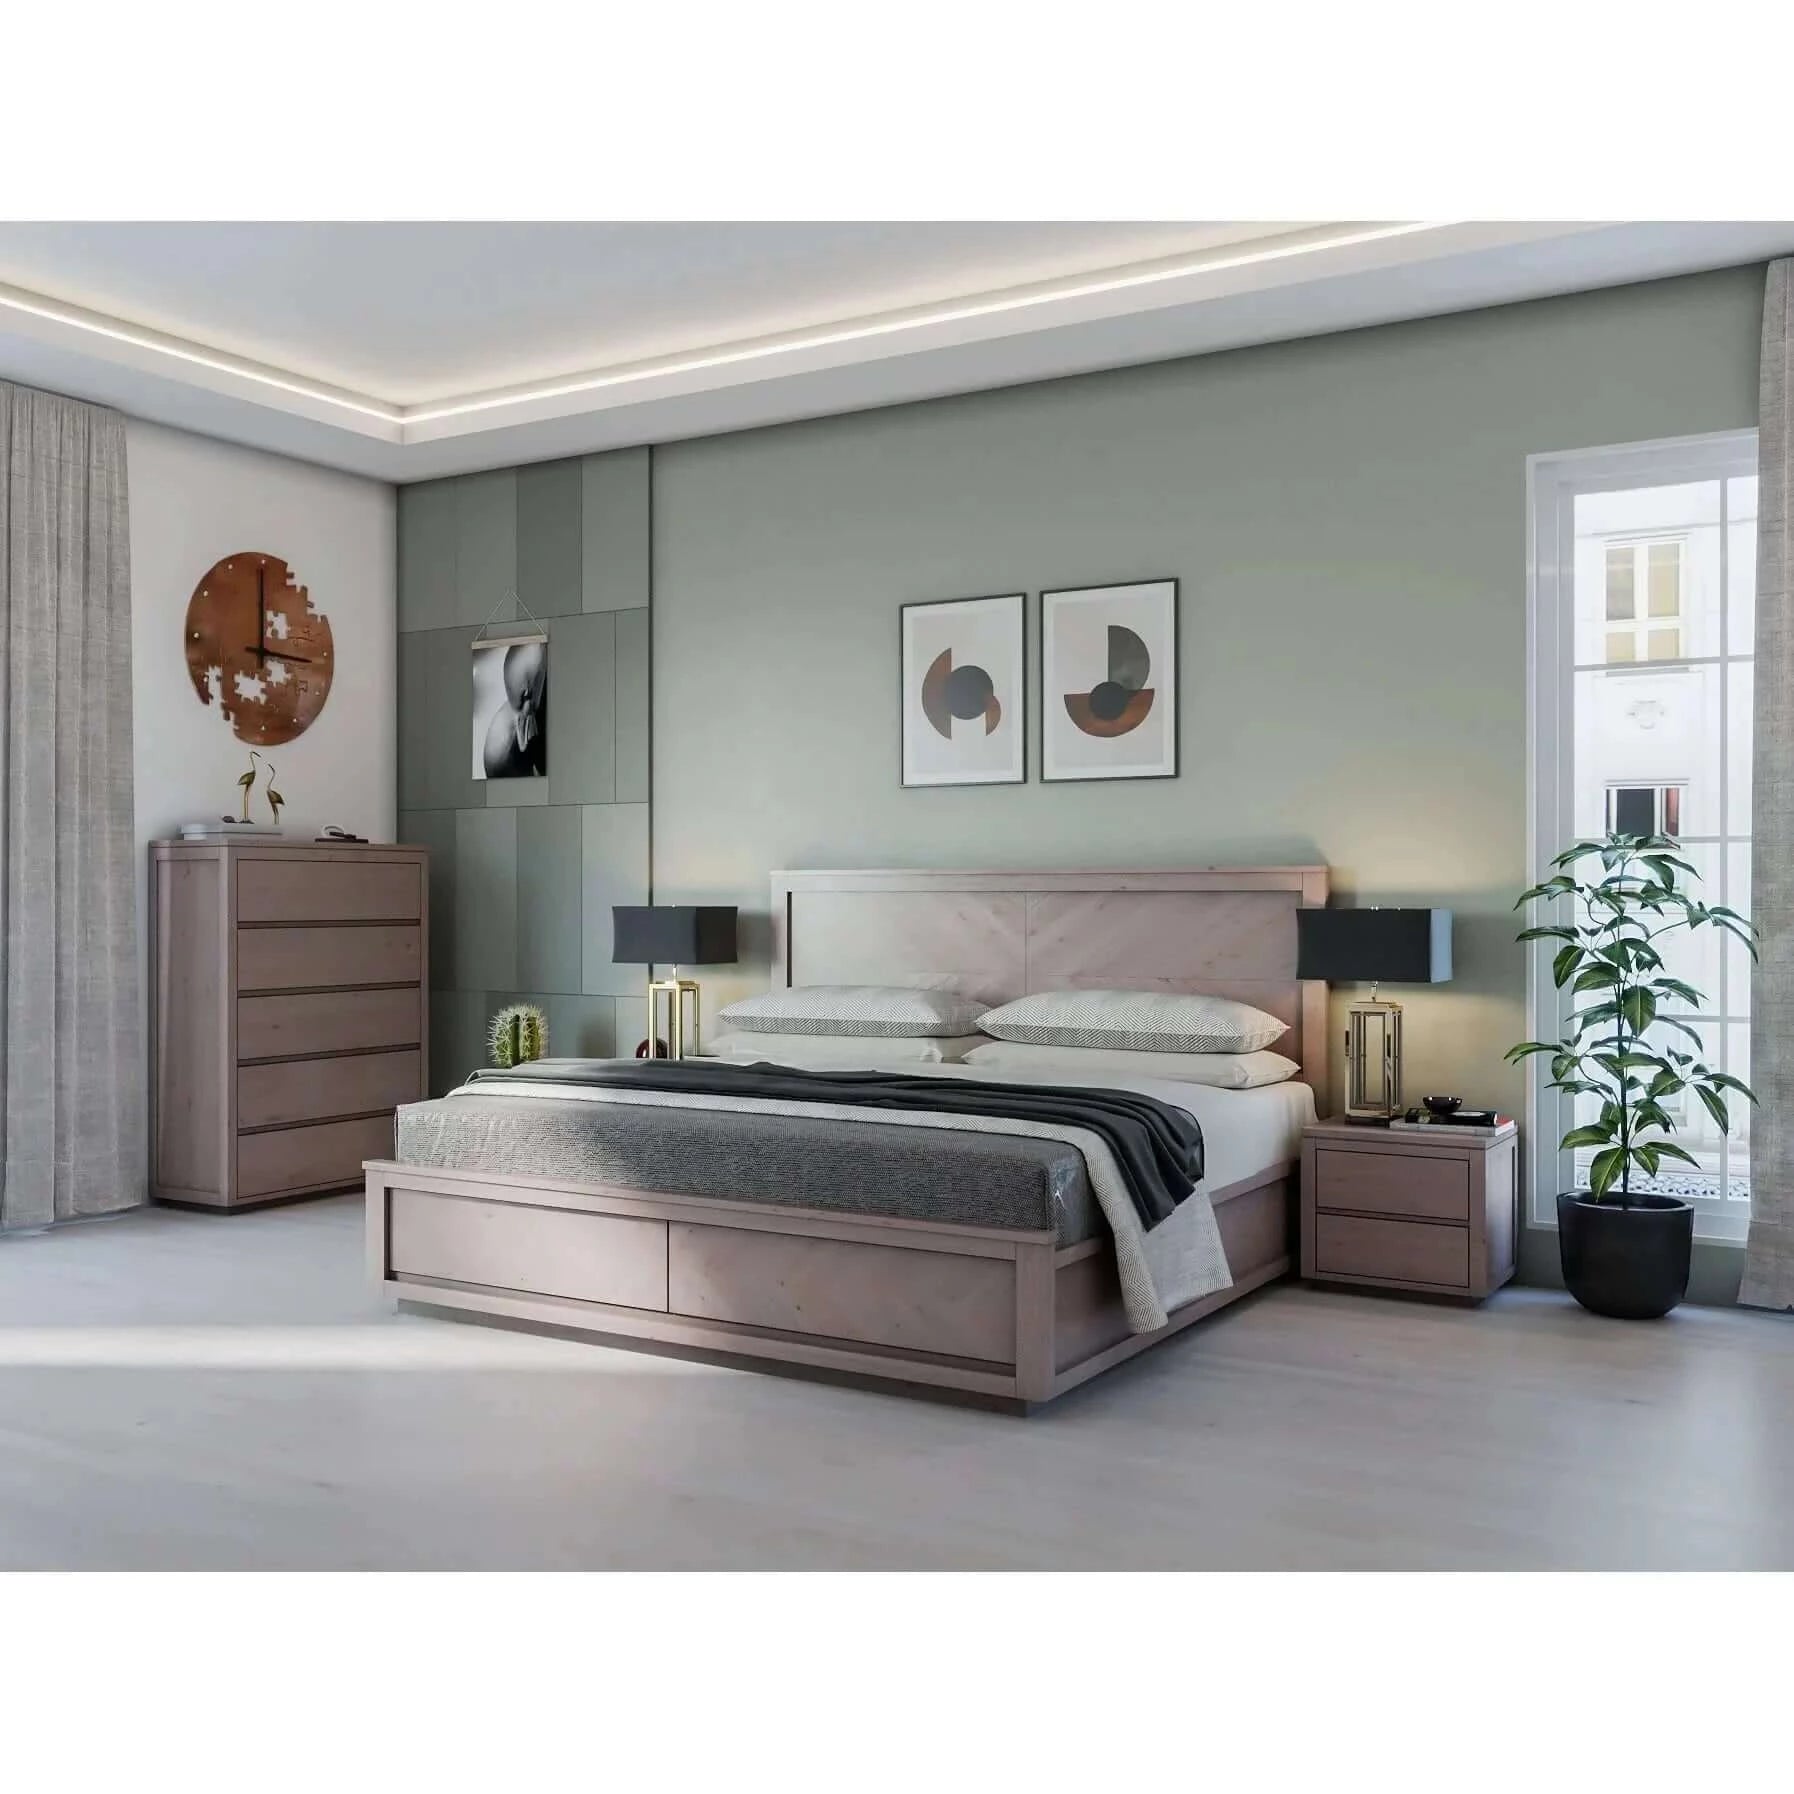 Buy rosemallow king size bed parquet solid messmate timber wood frame mattress base - upinteriors-Upinteriors